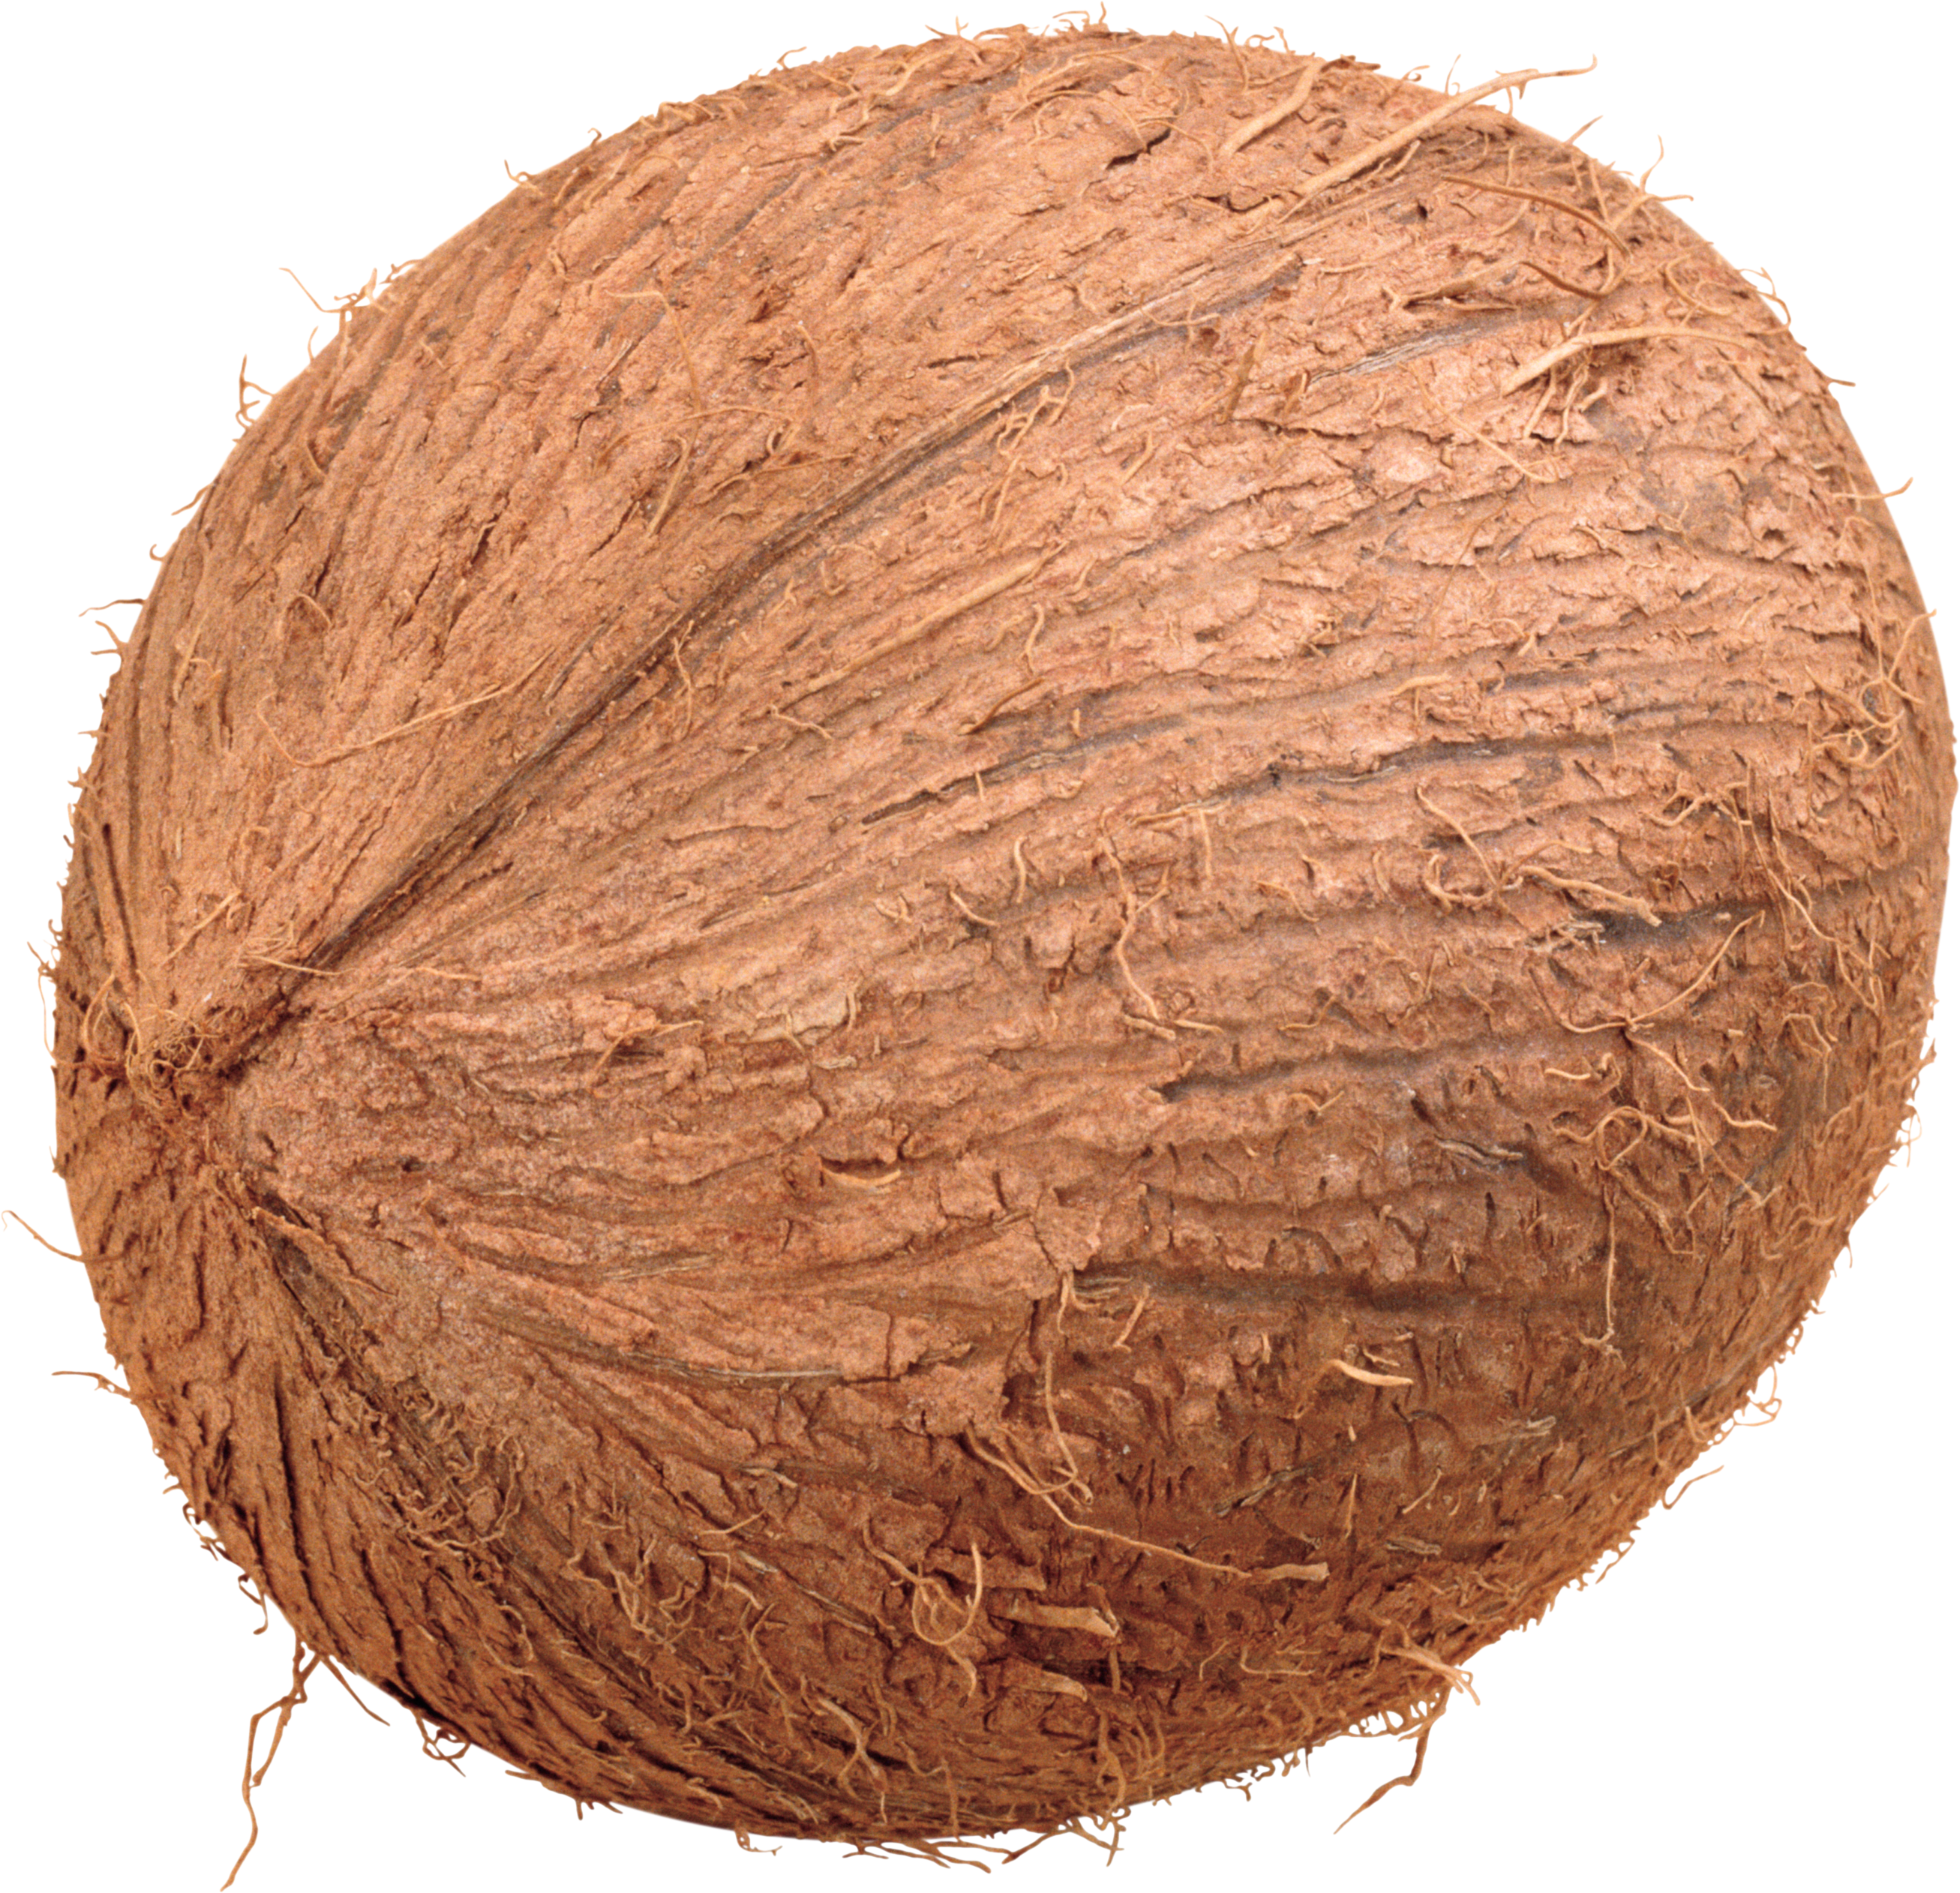 coconut clipart